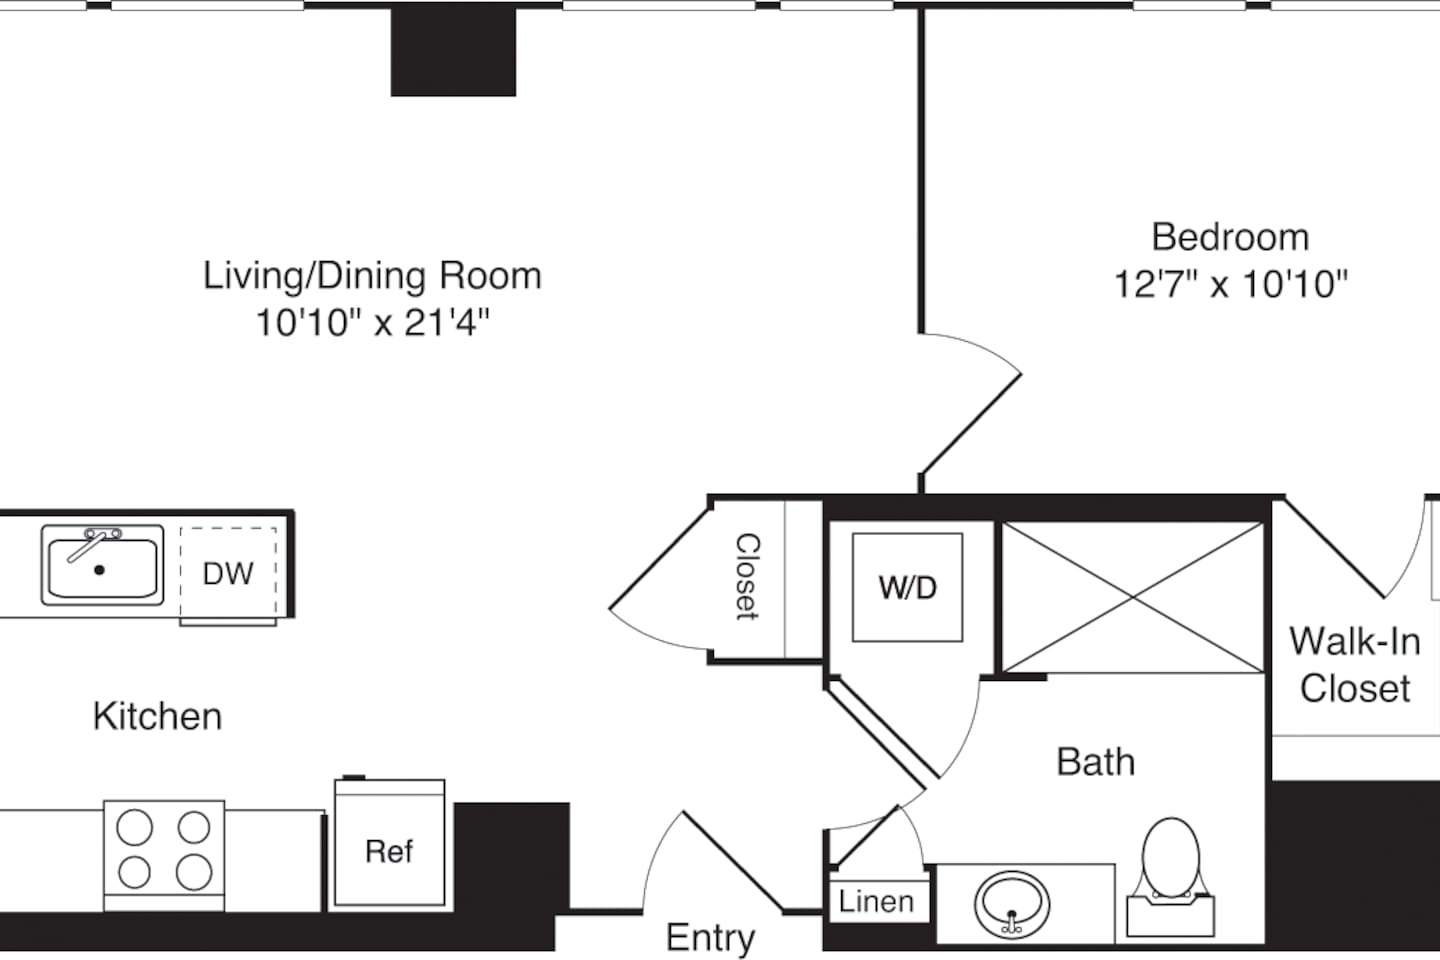 Floorplan diagram for A02, showing 1 bedroom